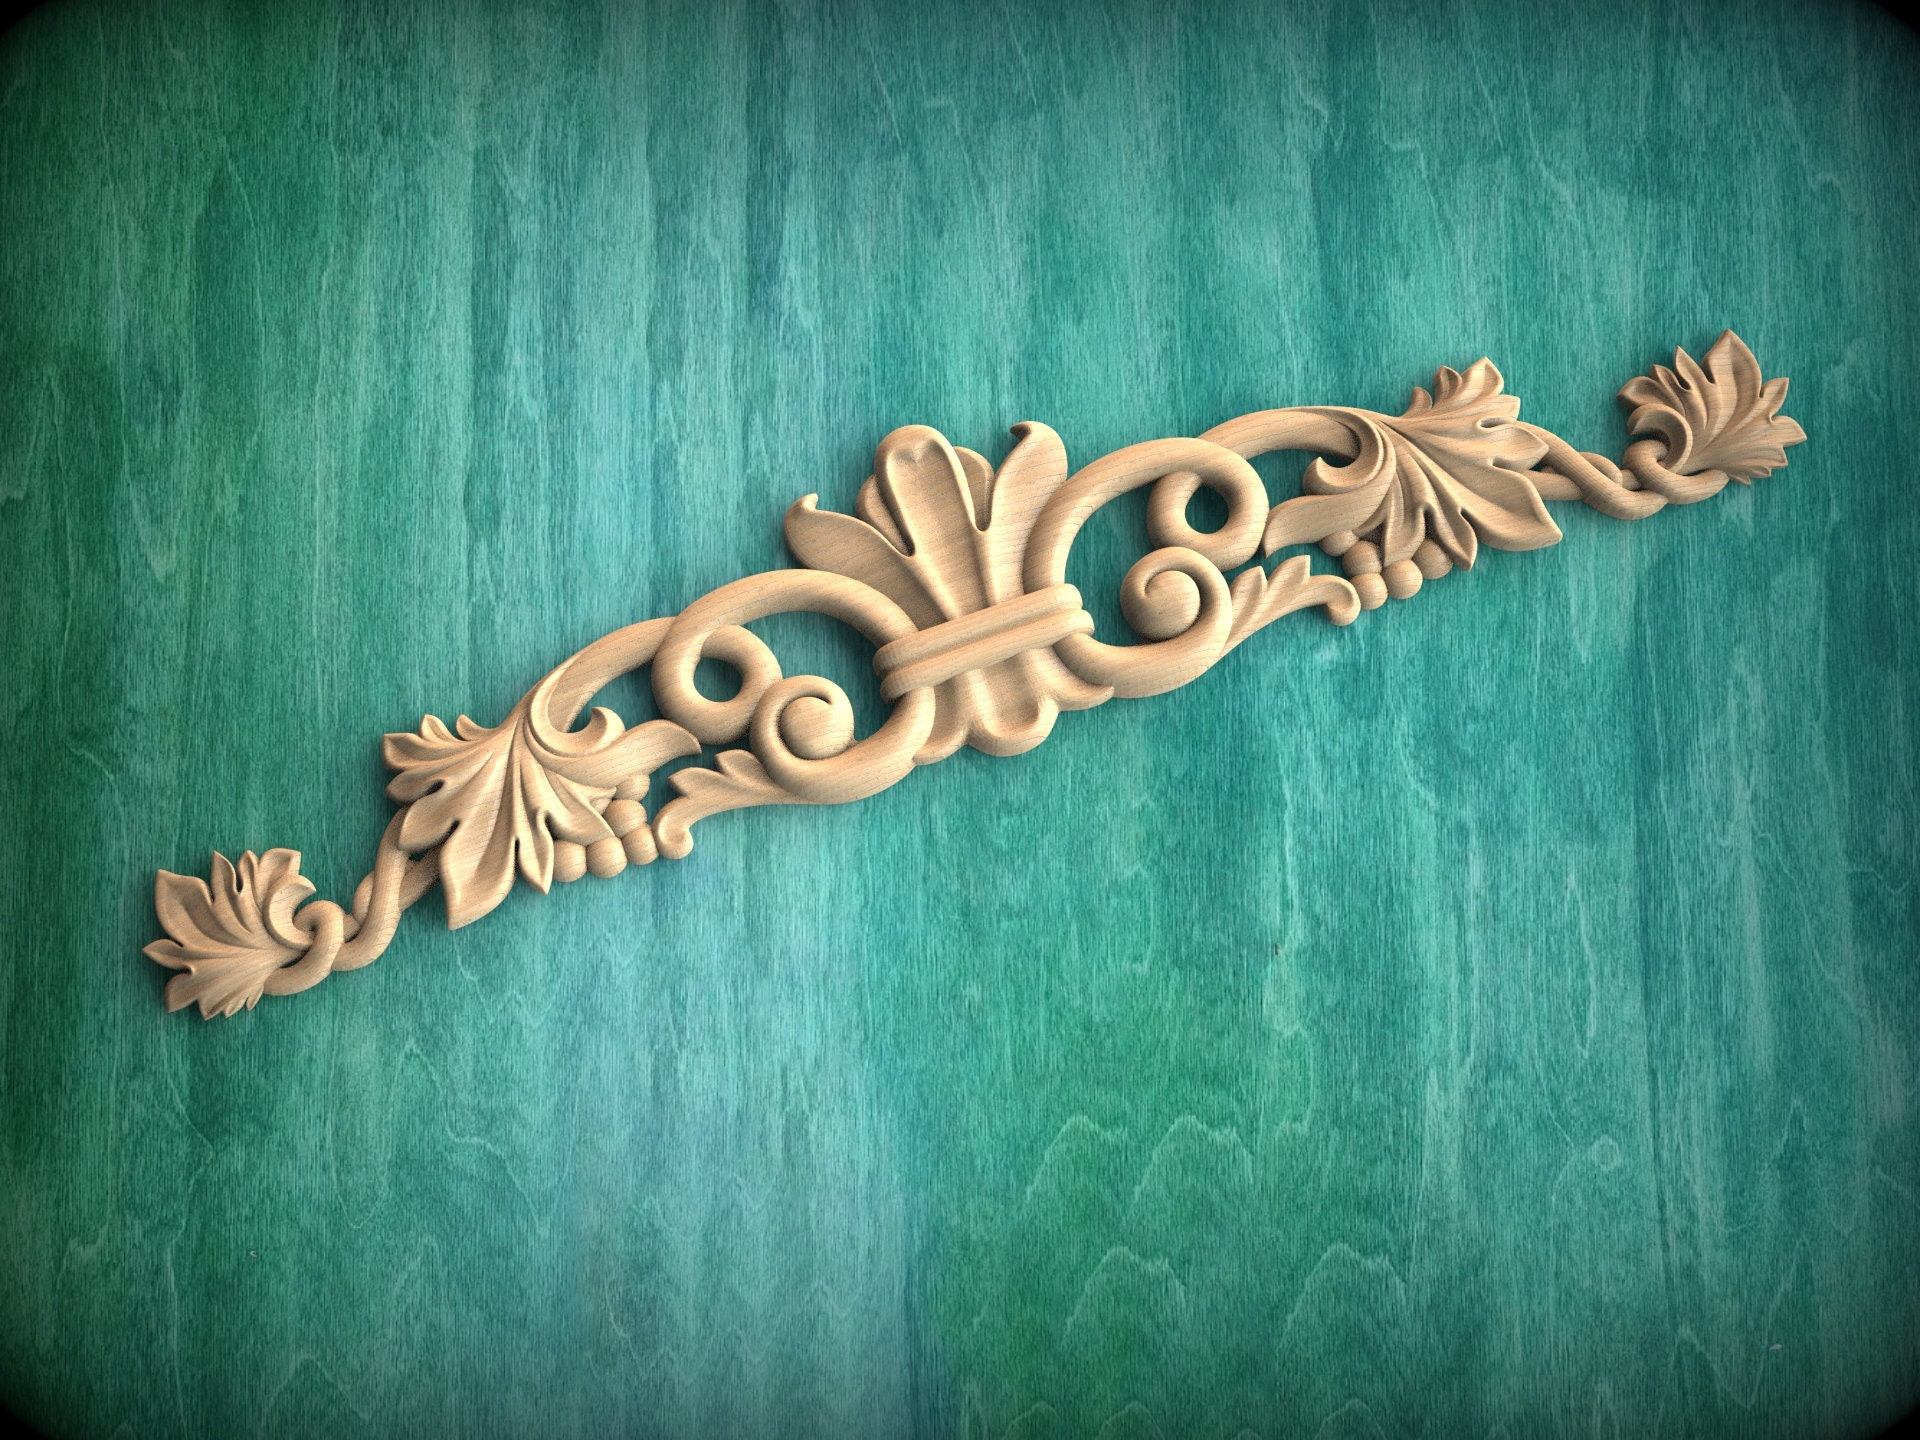 Madera Wood Carving - Wood Carvings - Grape Motif Onlays